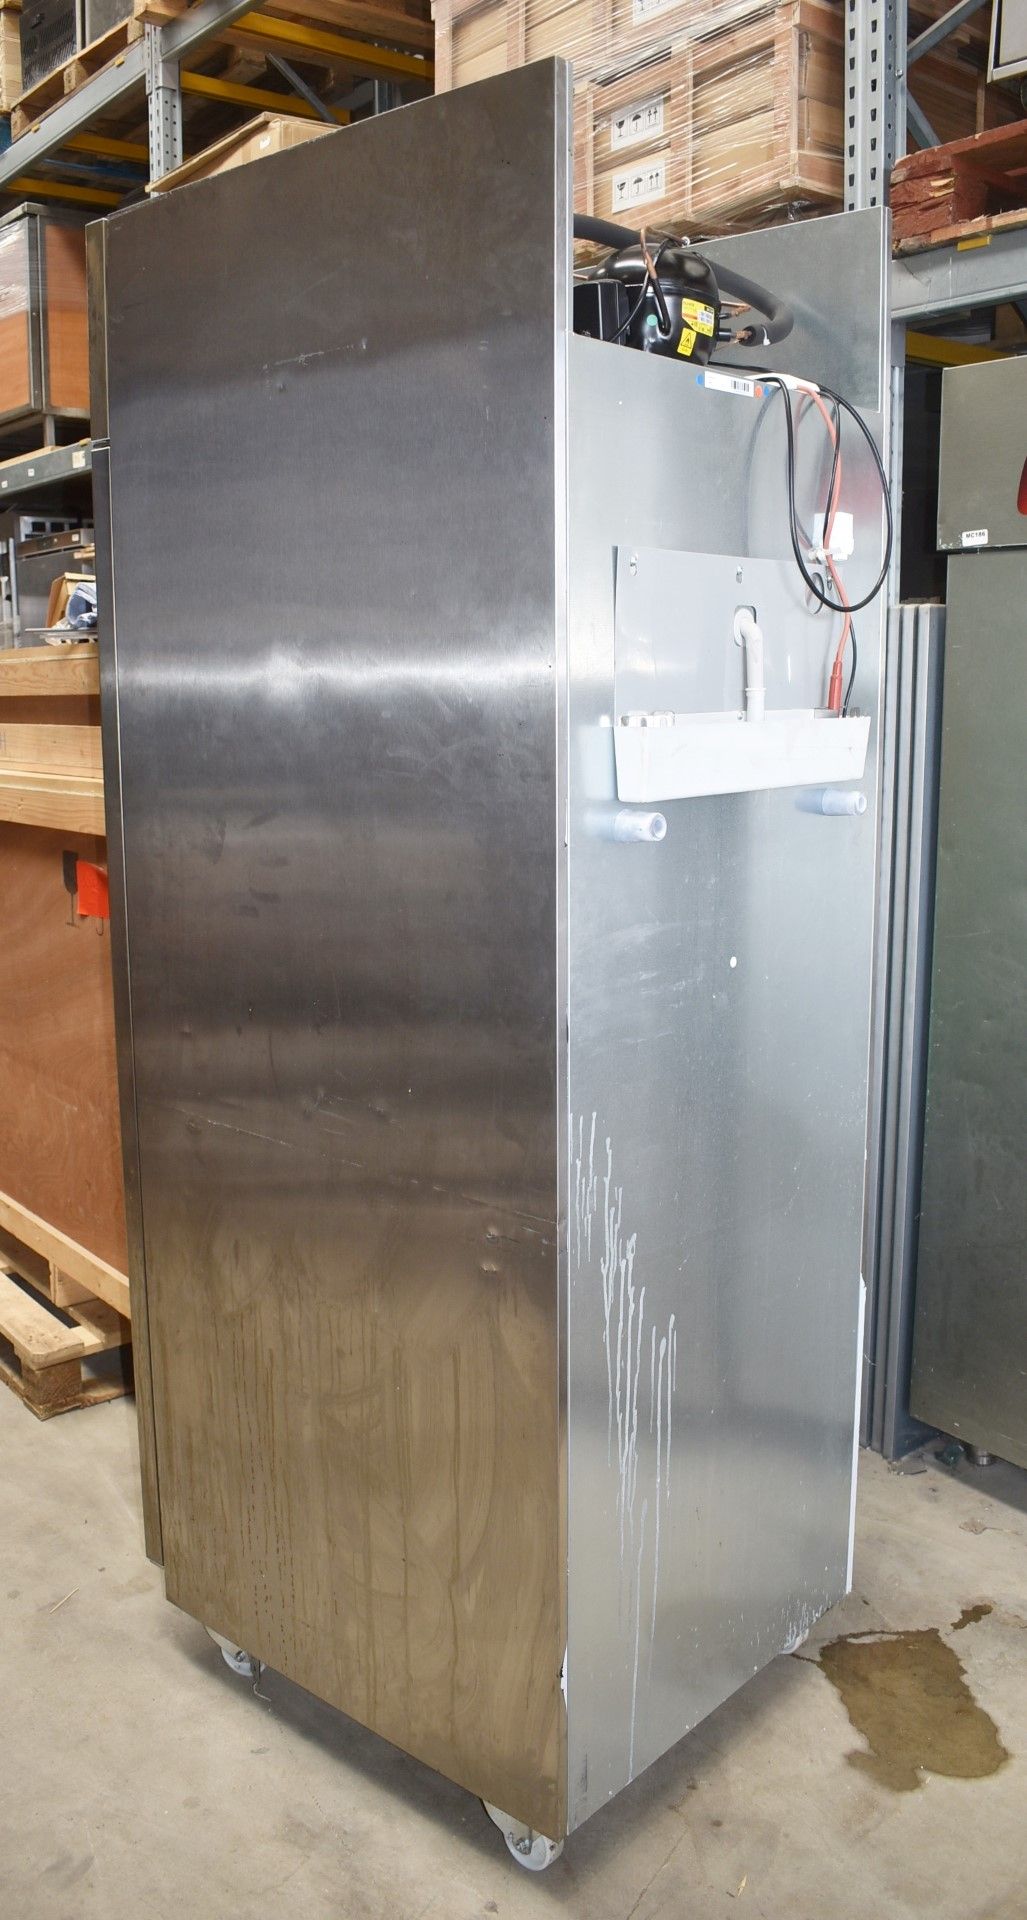 1 x Gram Upright Refrigerator - Model: PLUS K 69 FFG - Current 2021 Model - RRP £1,750 - Image 17 of 22